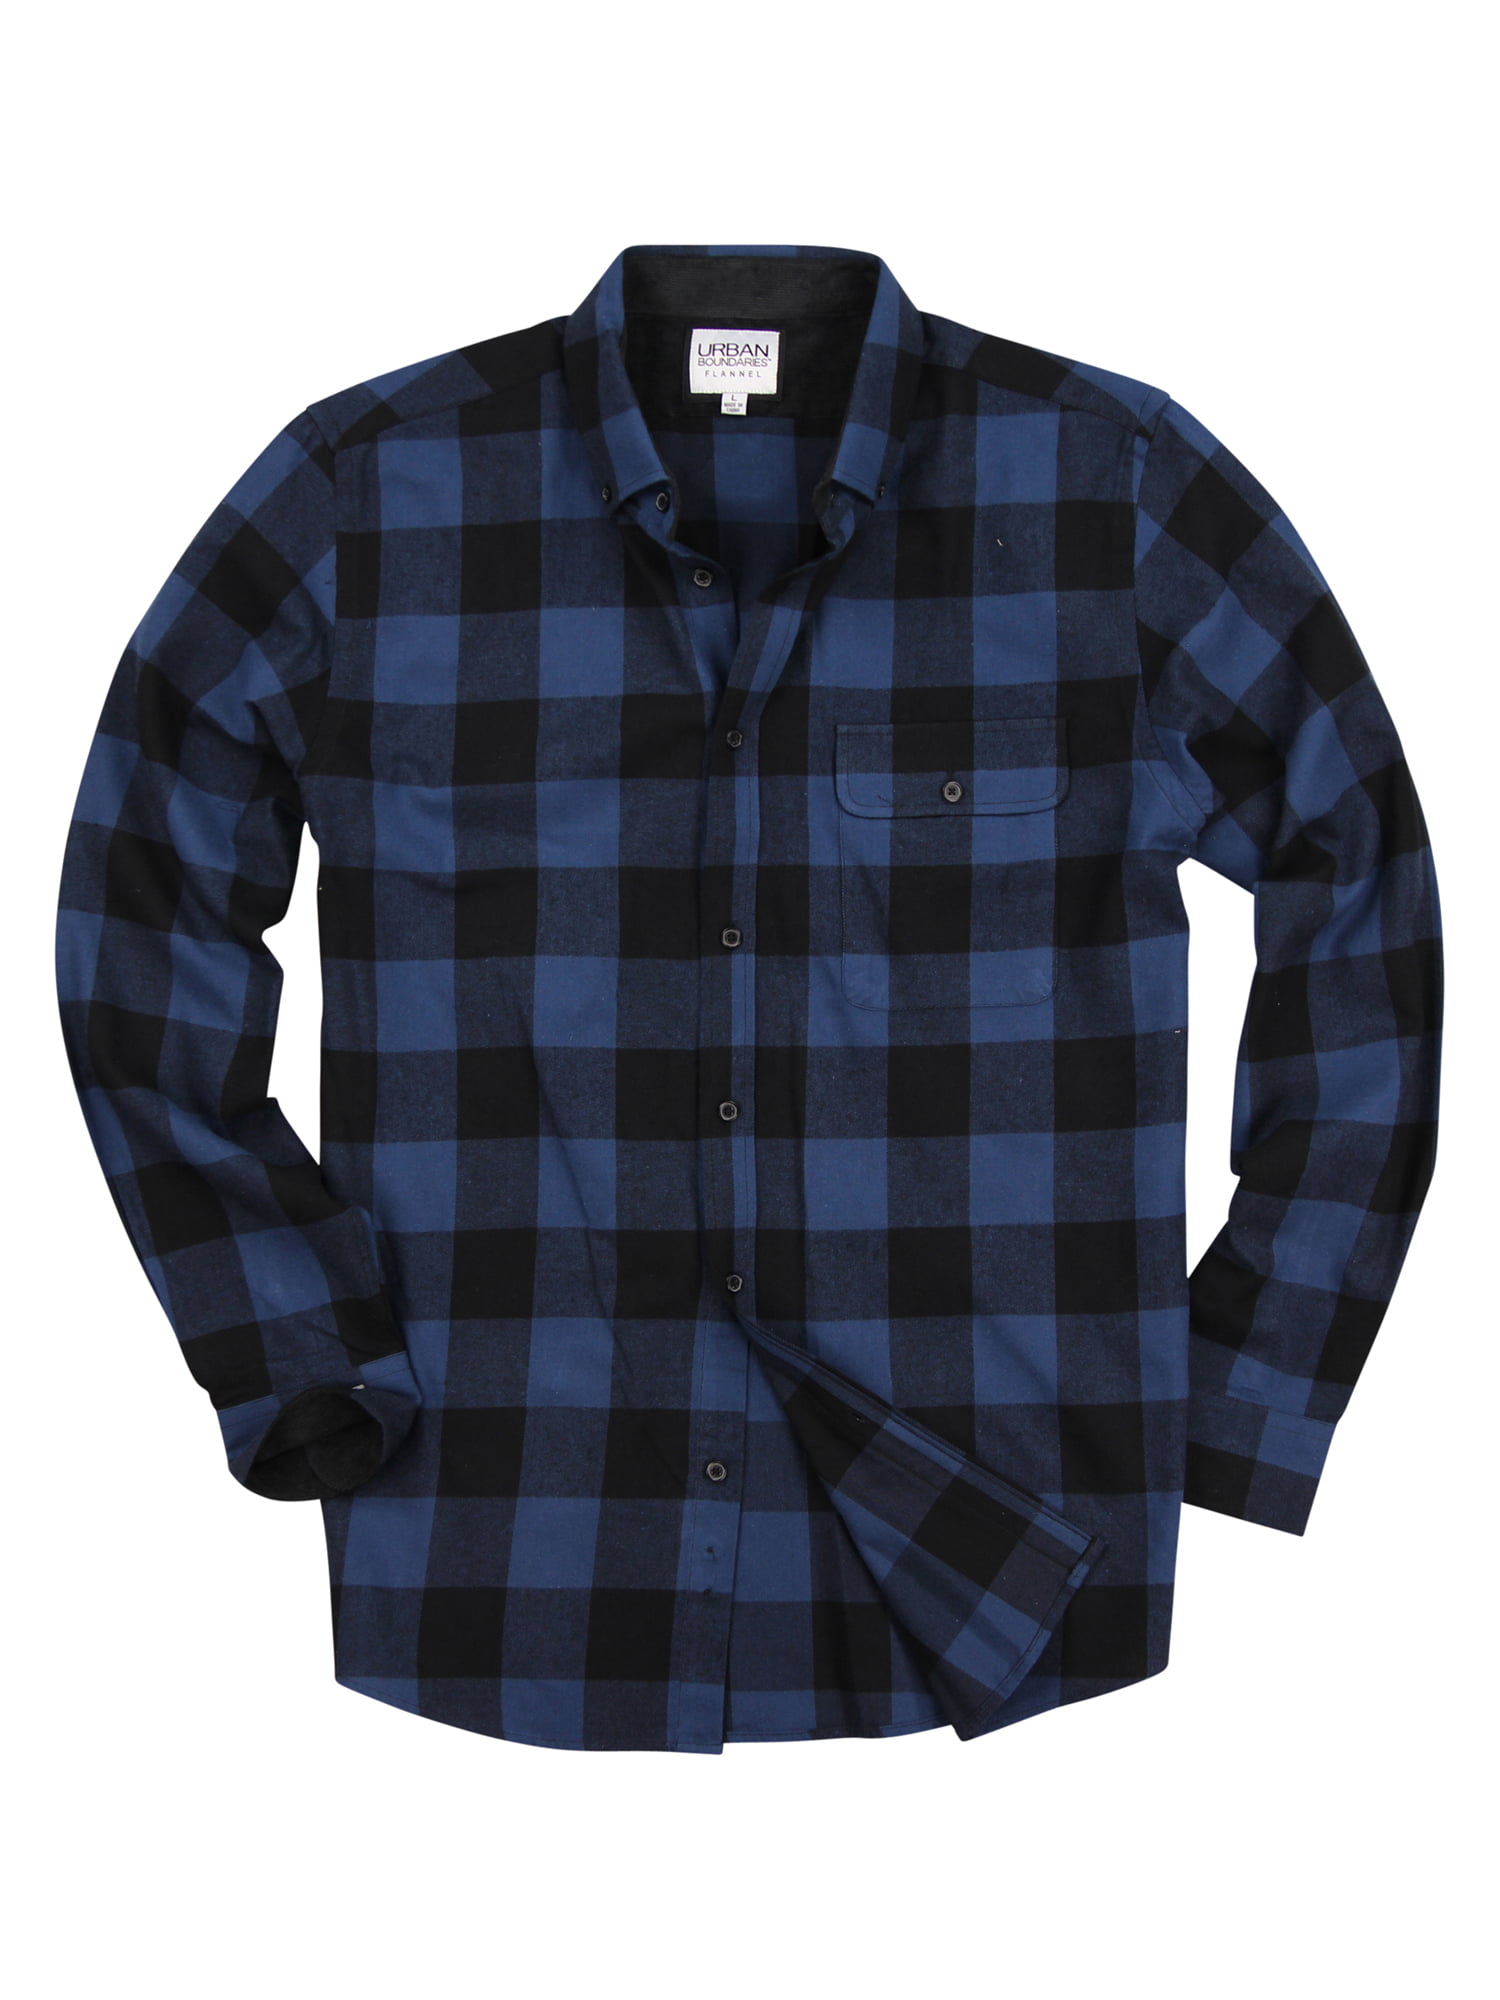 Men's Long Sleeve Flannel Shirt W/Button DownCollar (Navy/Black, Medium ...